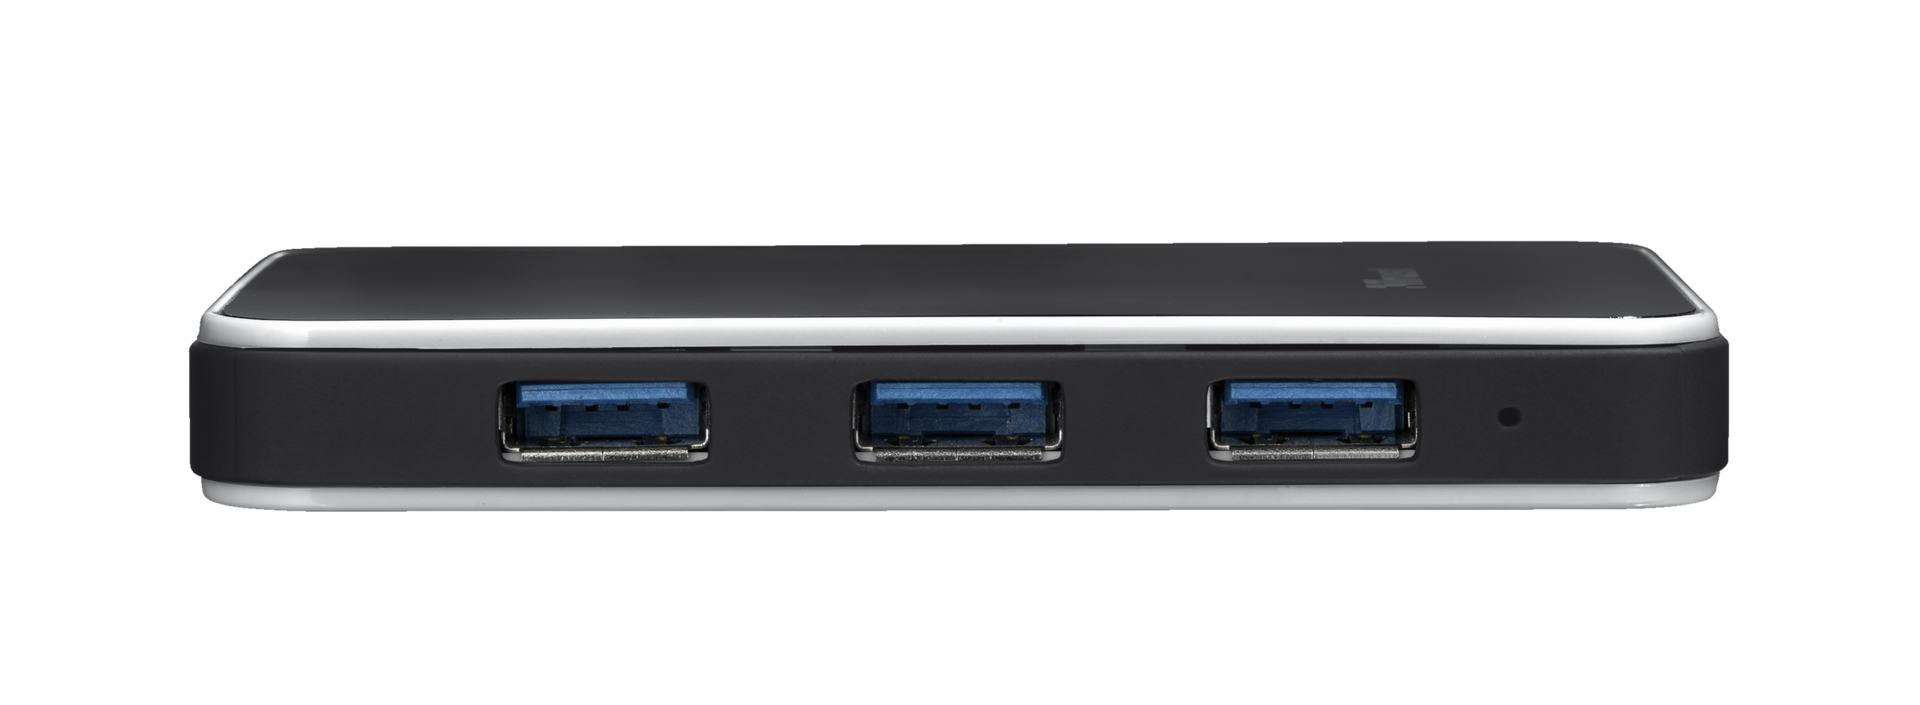 4 Port USB 3.0 Hub-Side